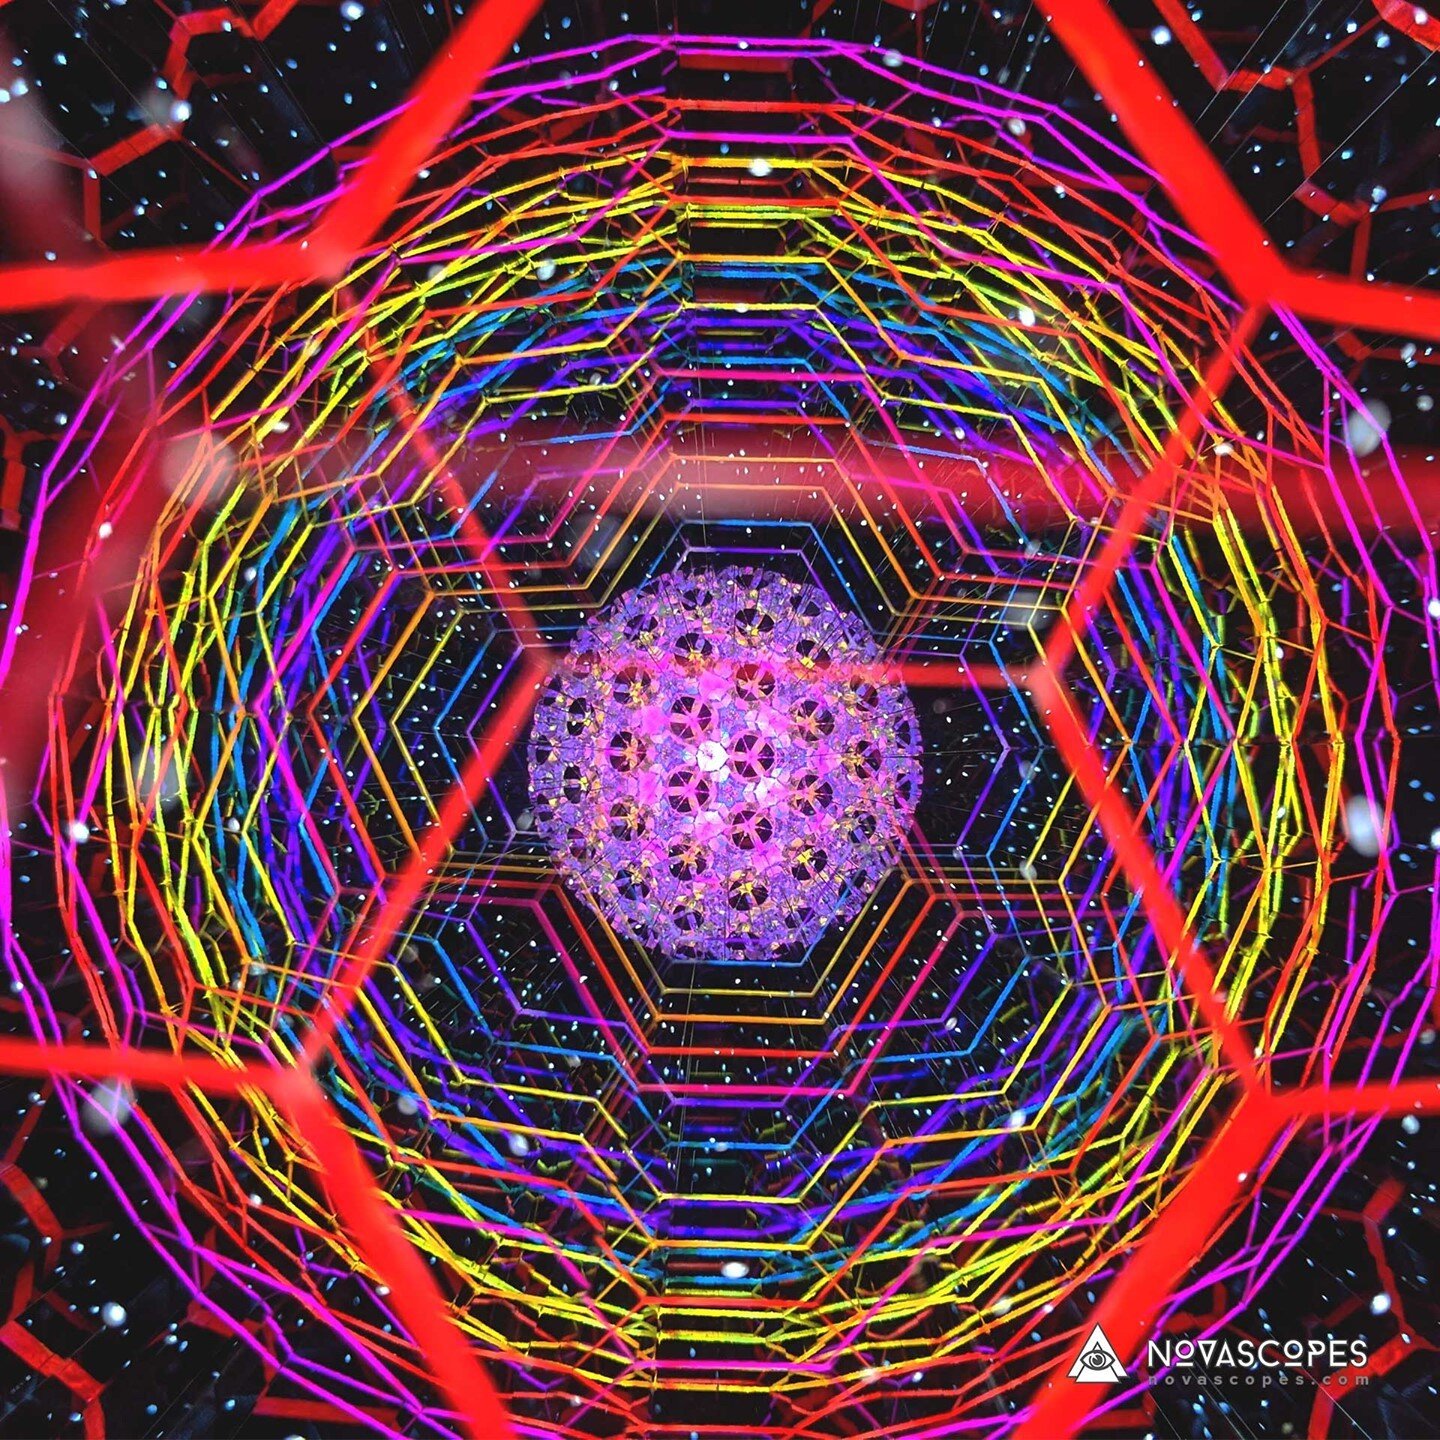 Lovely interior shot of a 12-inch &quot;Slim&quot; Nova Scope
.
.
.
.
.
#kaleidoscope #novascopes #wow #geometricart #handmade #kaleidoscopeart #stainedglassart #sacredgeometry #psychedelicart #fractals